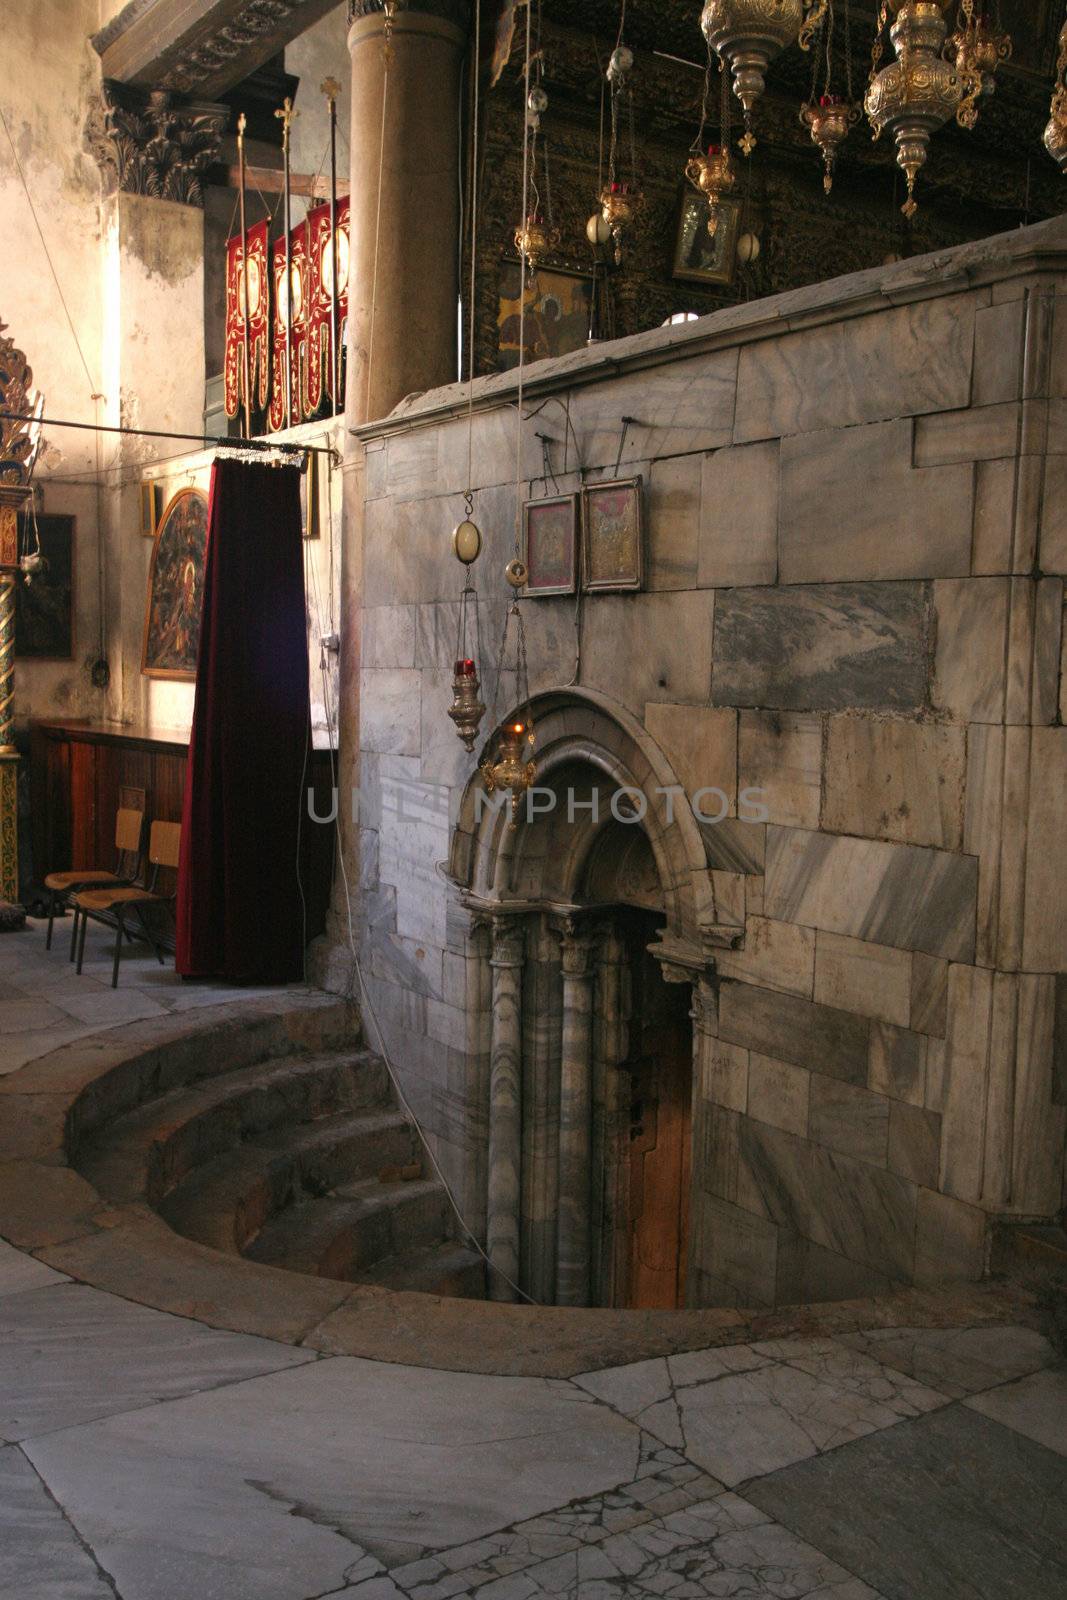 Entrance to the Grotto of the Nativity, Bethlehem